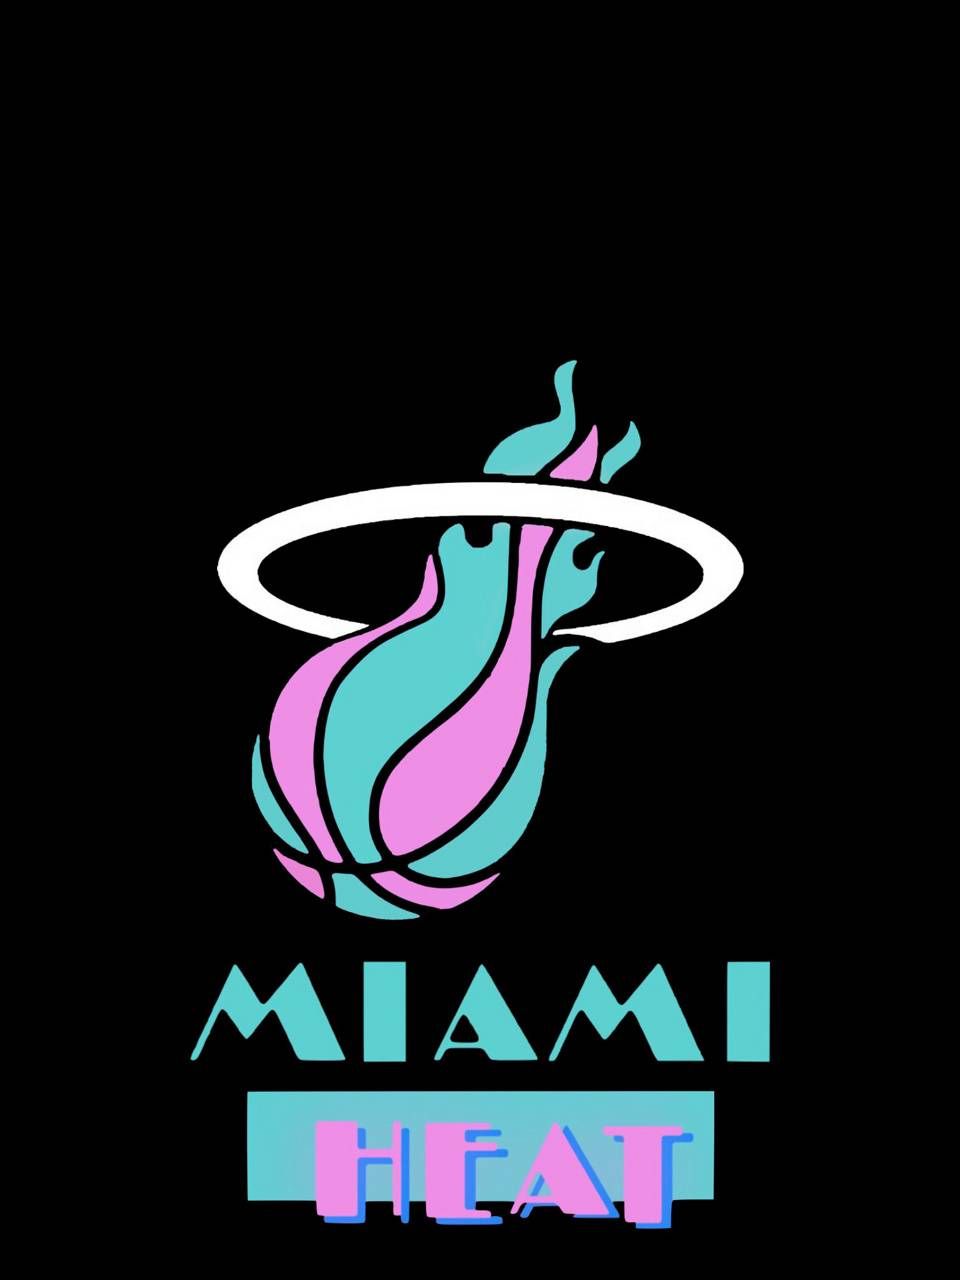 Miami Heat wallpaper